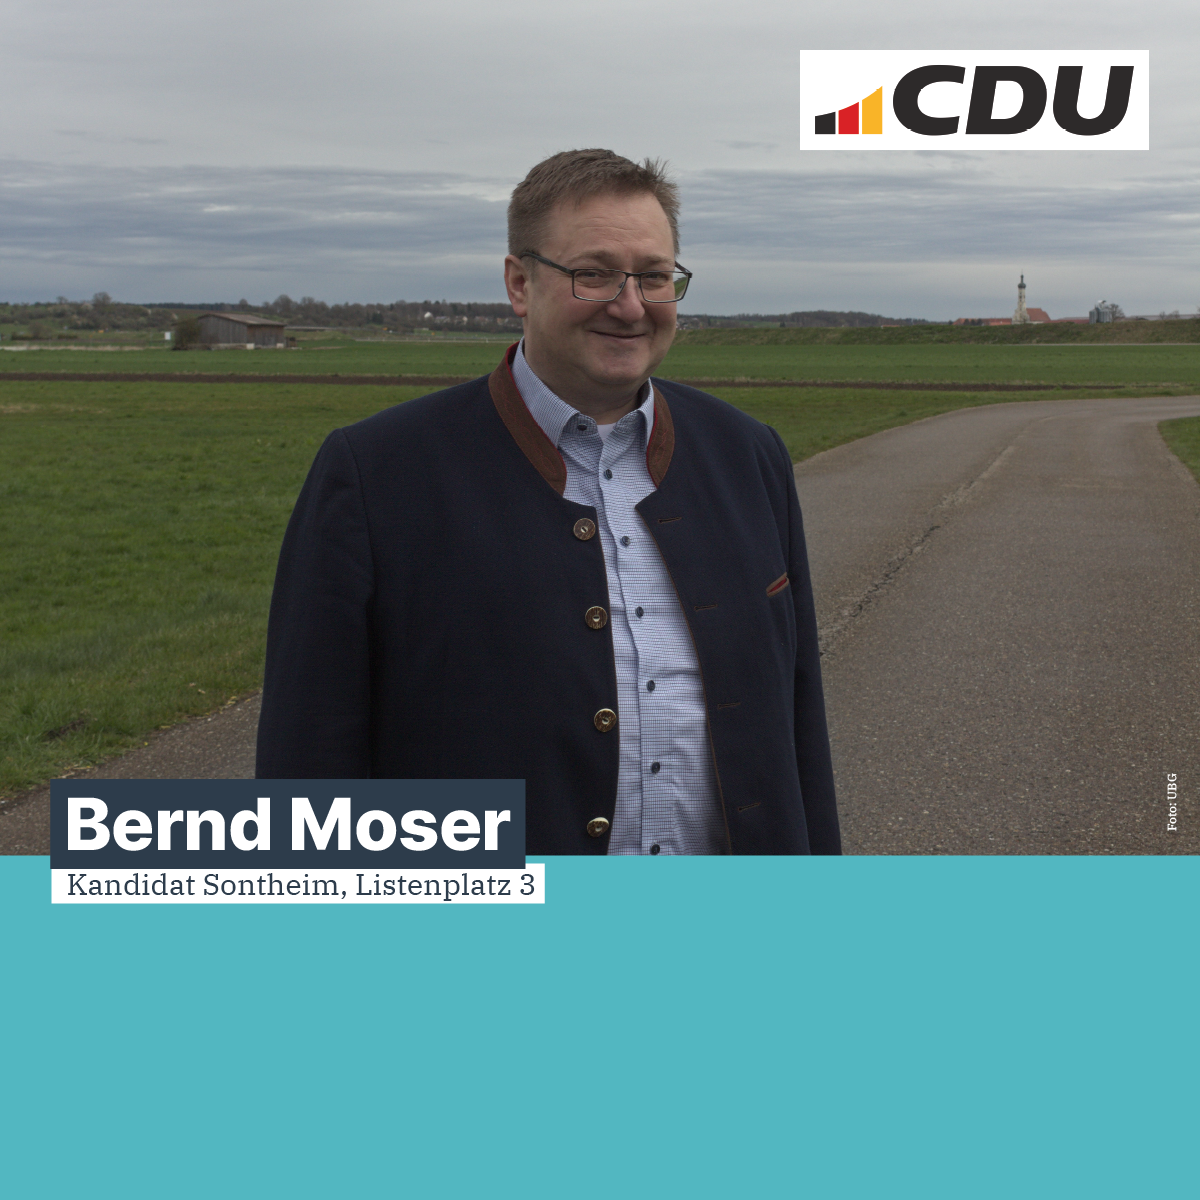  Bernd Moser